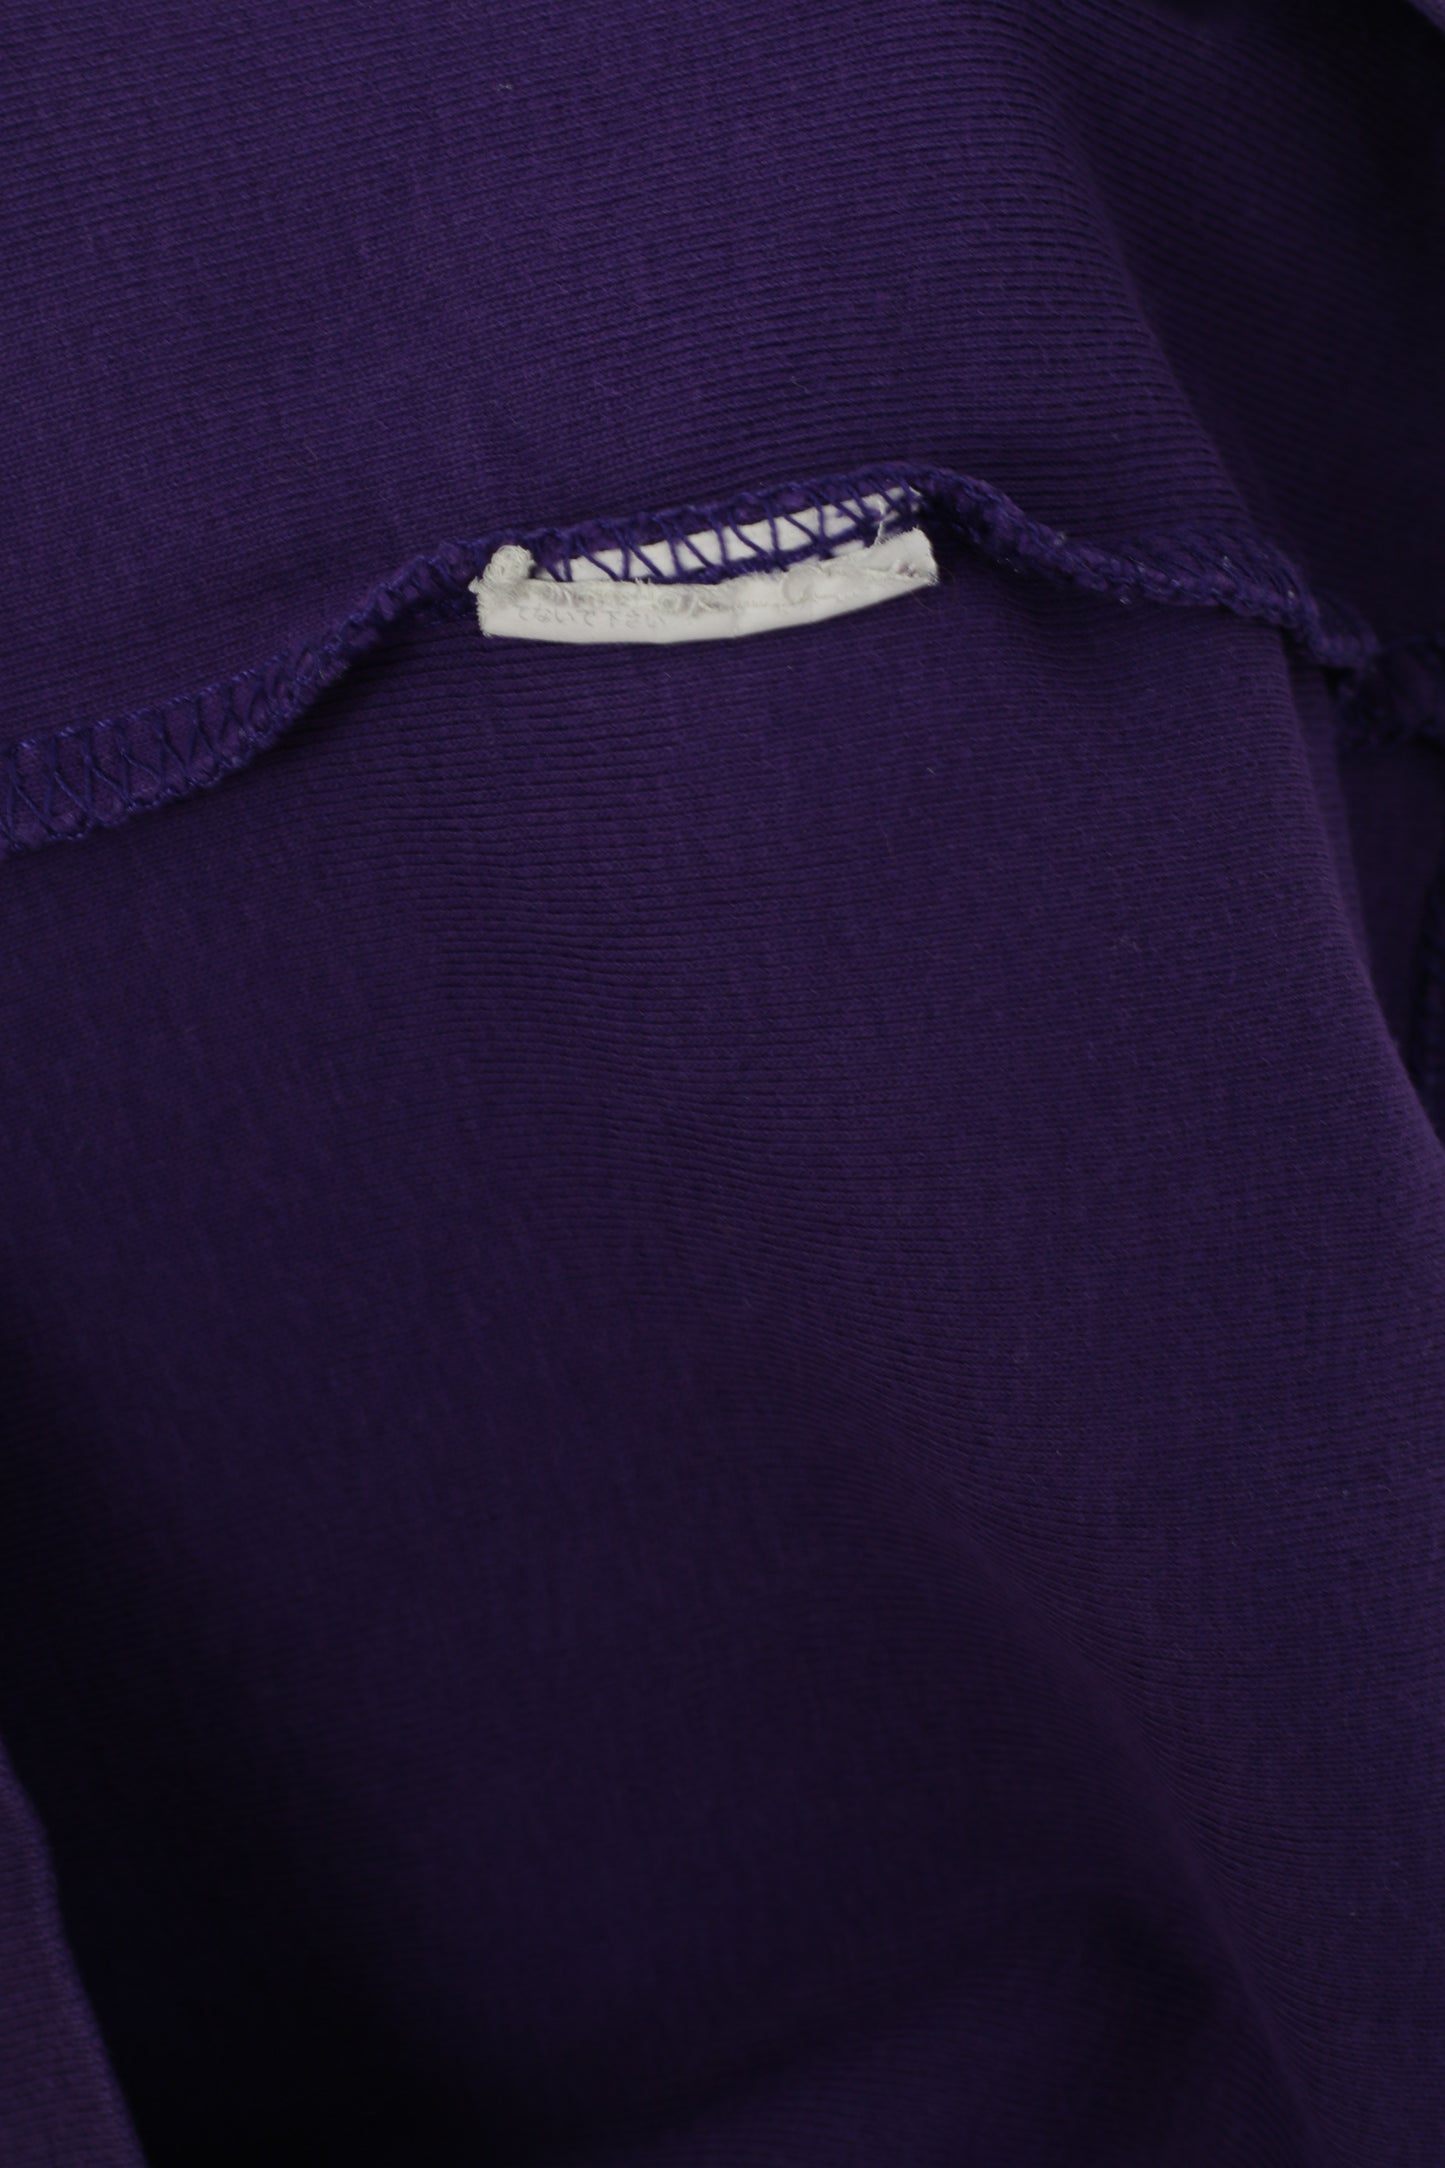 G-Star Men XL (L) Long Sleeved Shirt Purple Cotton Crew Neck Logo Top